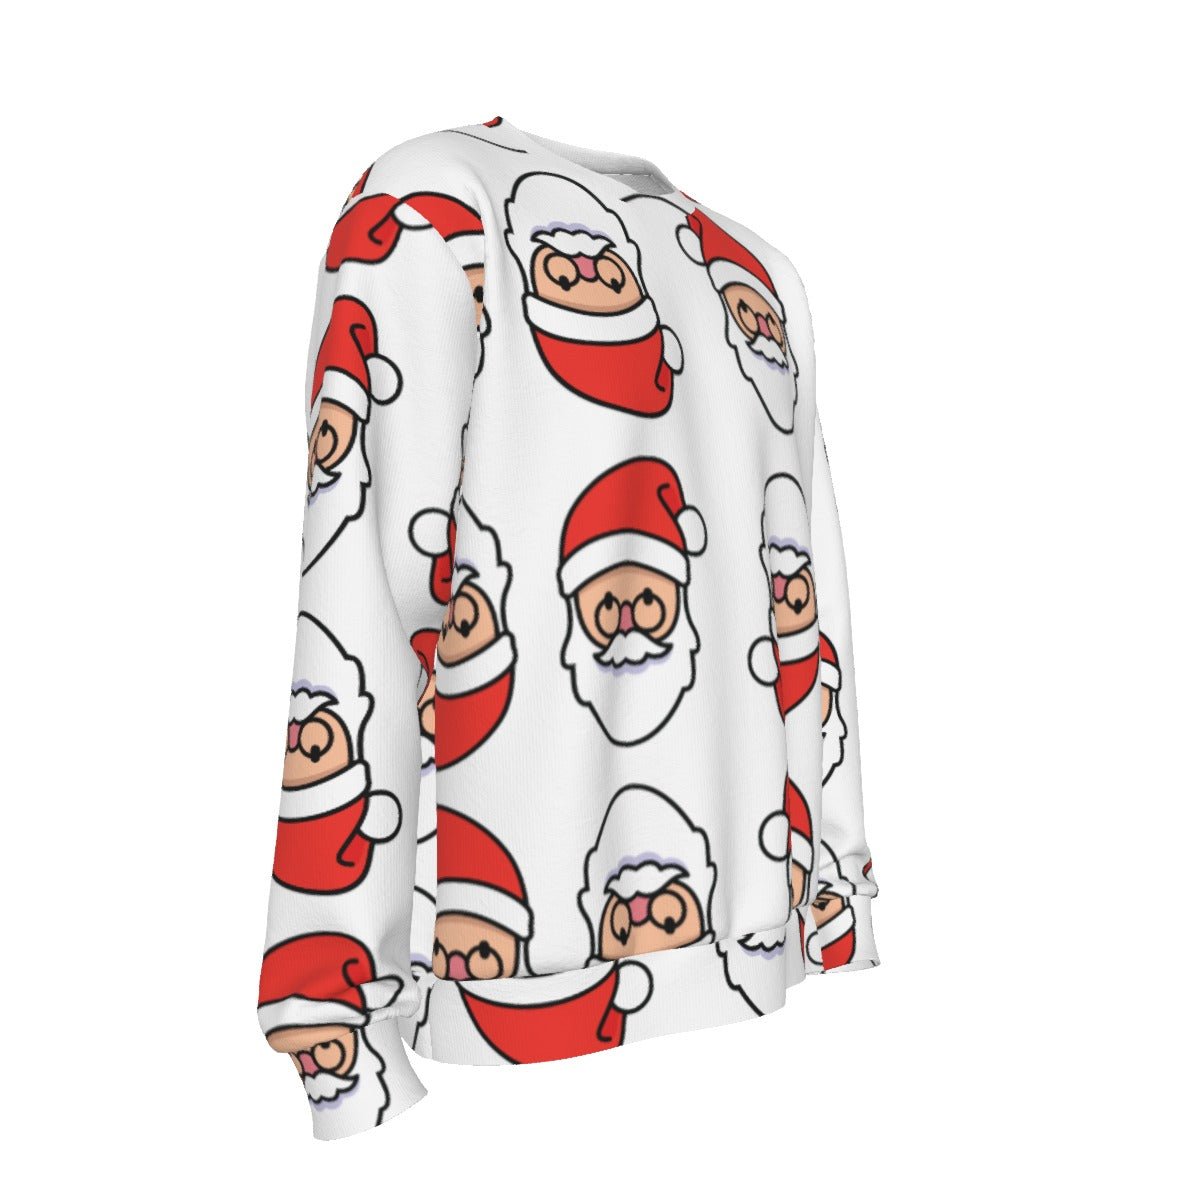 Men's Christmas Sweater - Mirrored Santa - Festive Style